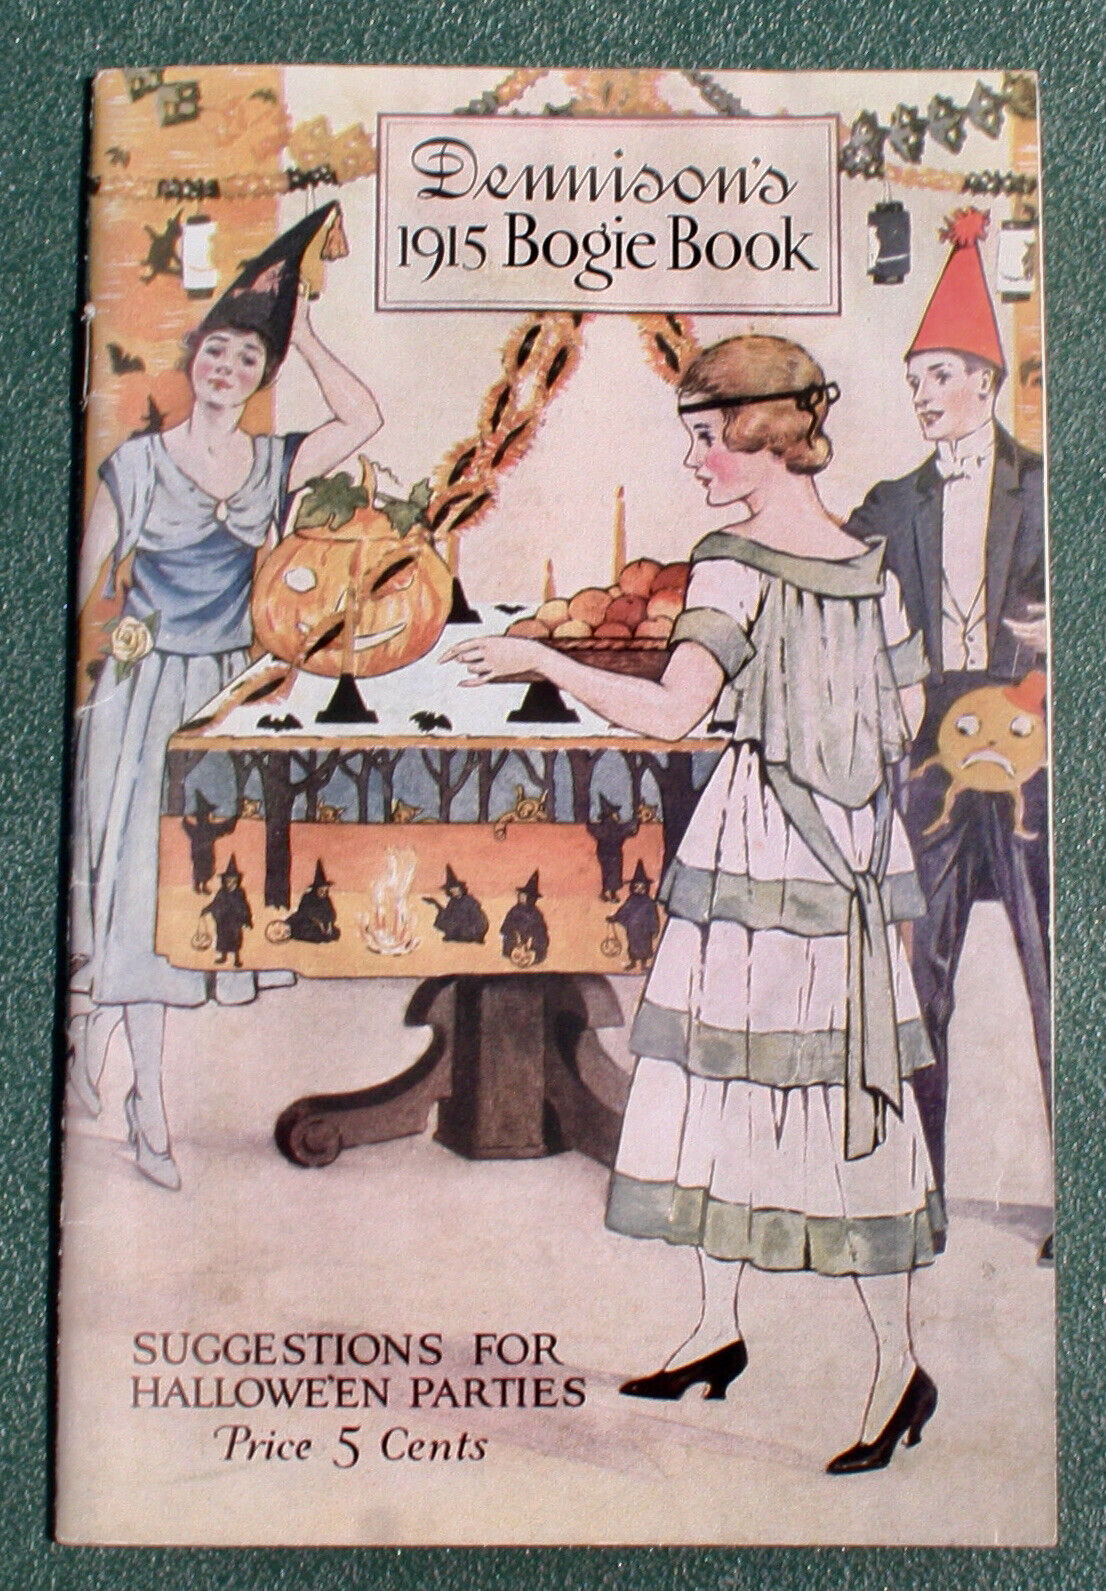 Halloween Vintage Dennison Bogie Book, 1915, Price 5 Cents, 44 Pages Plus Cover